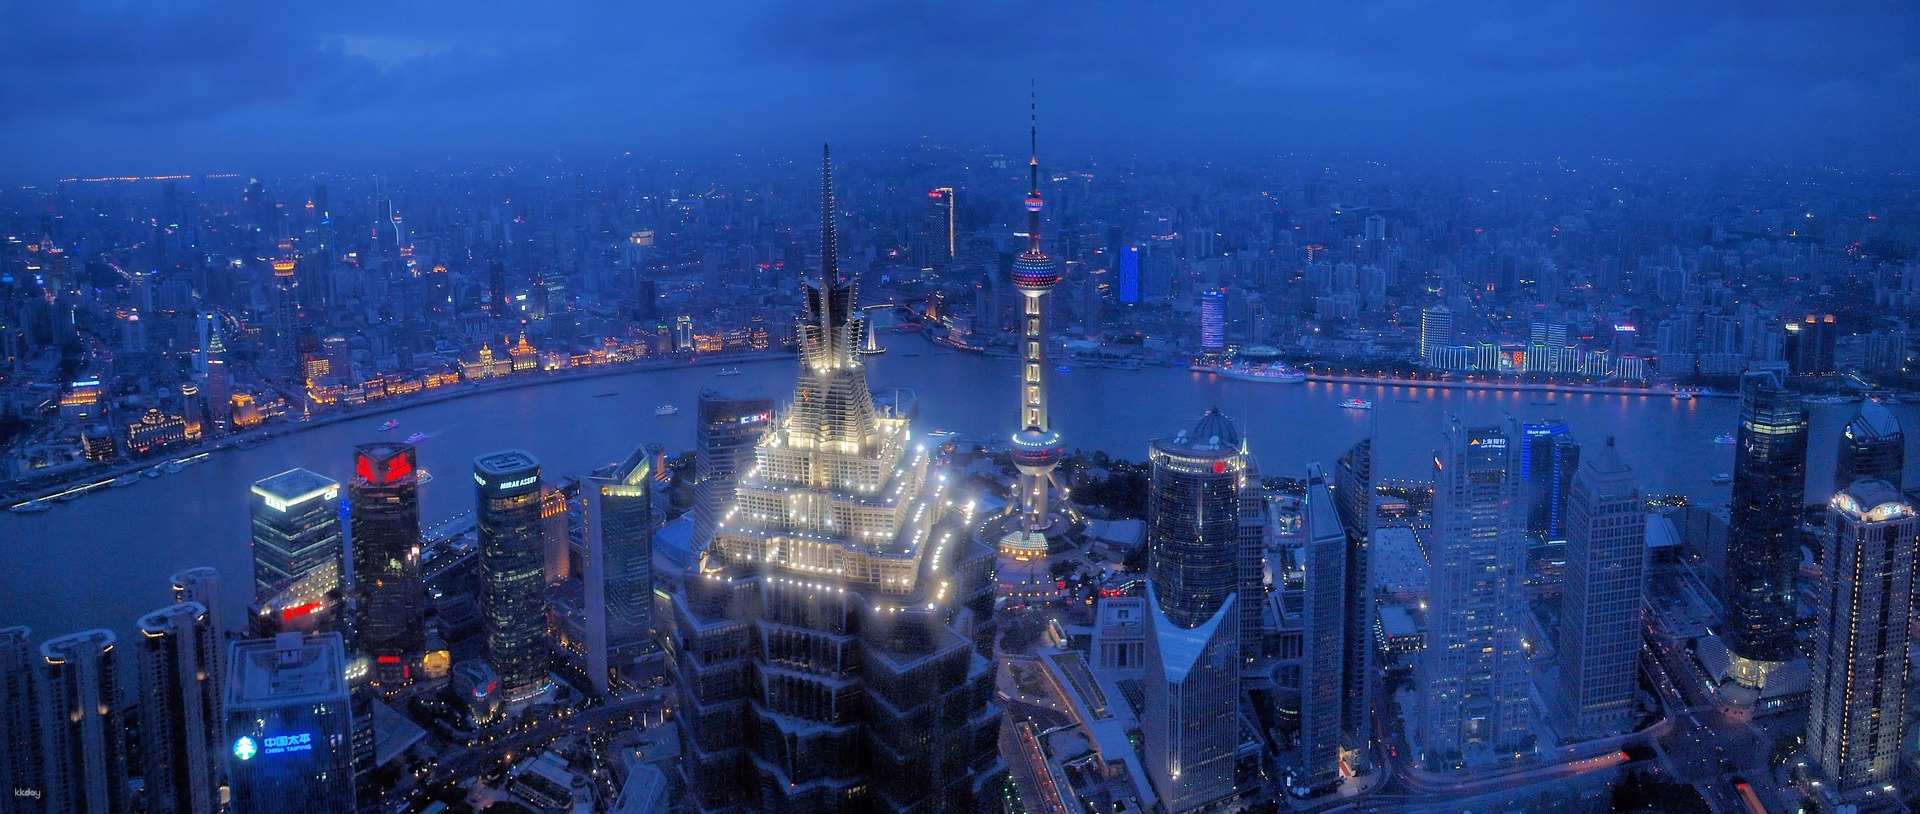 中國-上海金茂大廈88層觀光廳門票 Jin Mao Tower 88th Floor Observation Deck Ticket